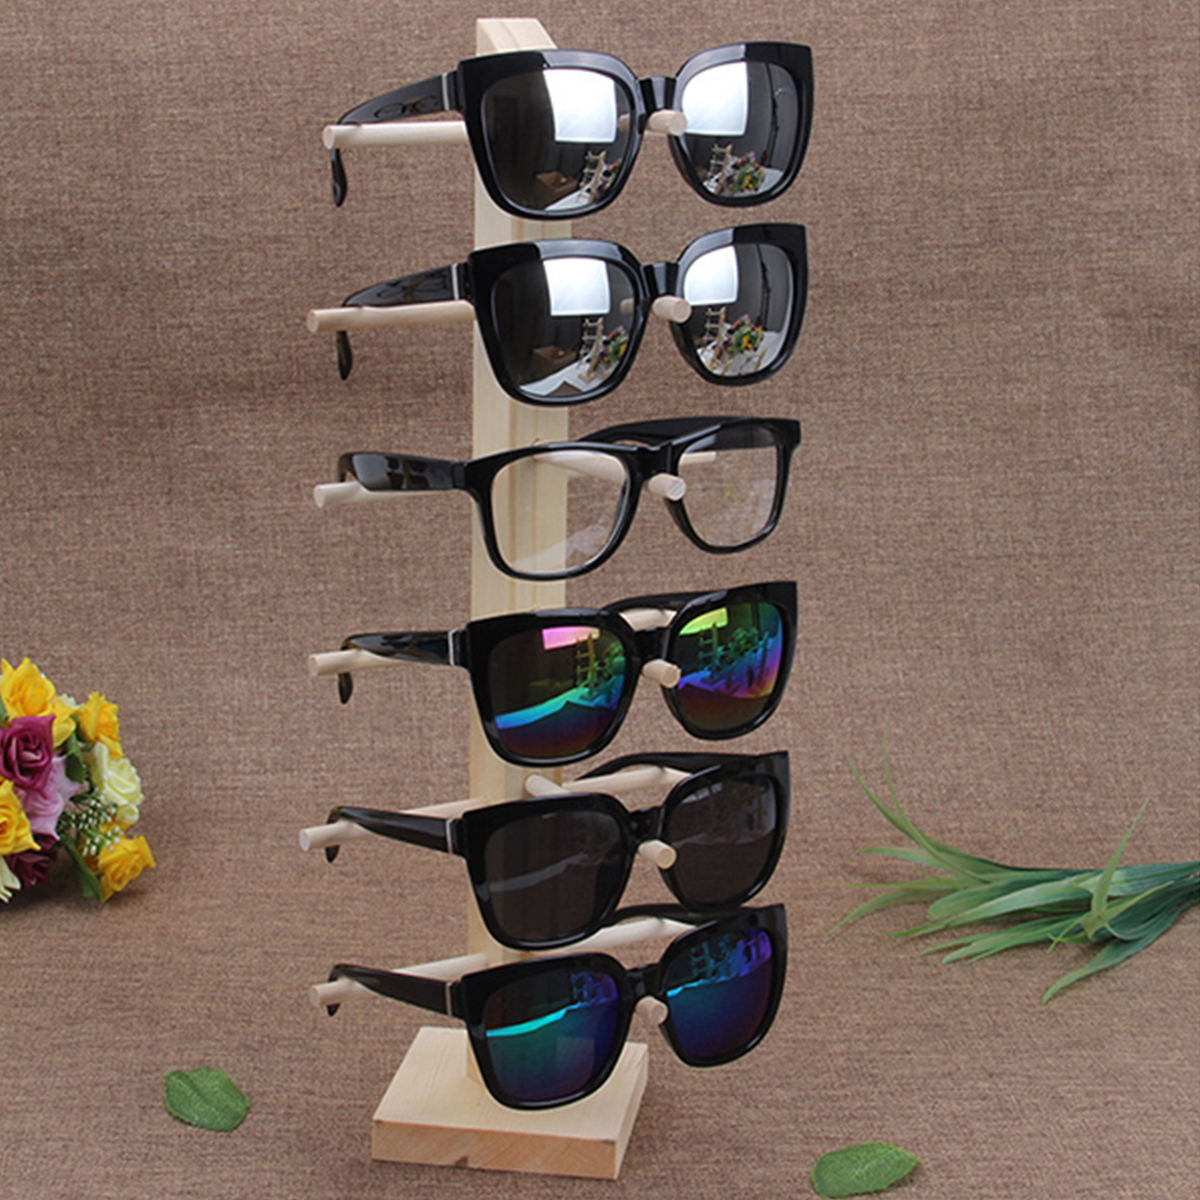 Natural-Wood-Wooden-Sunglasses-Eyeglasseses-Display-Rack-Stand-Holder-Organizer-3456-Layers-1478396-3